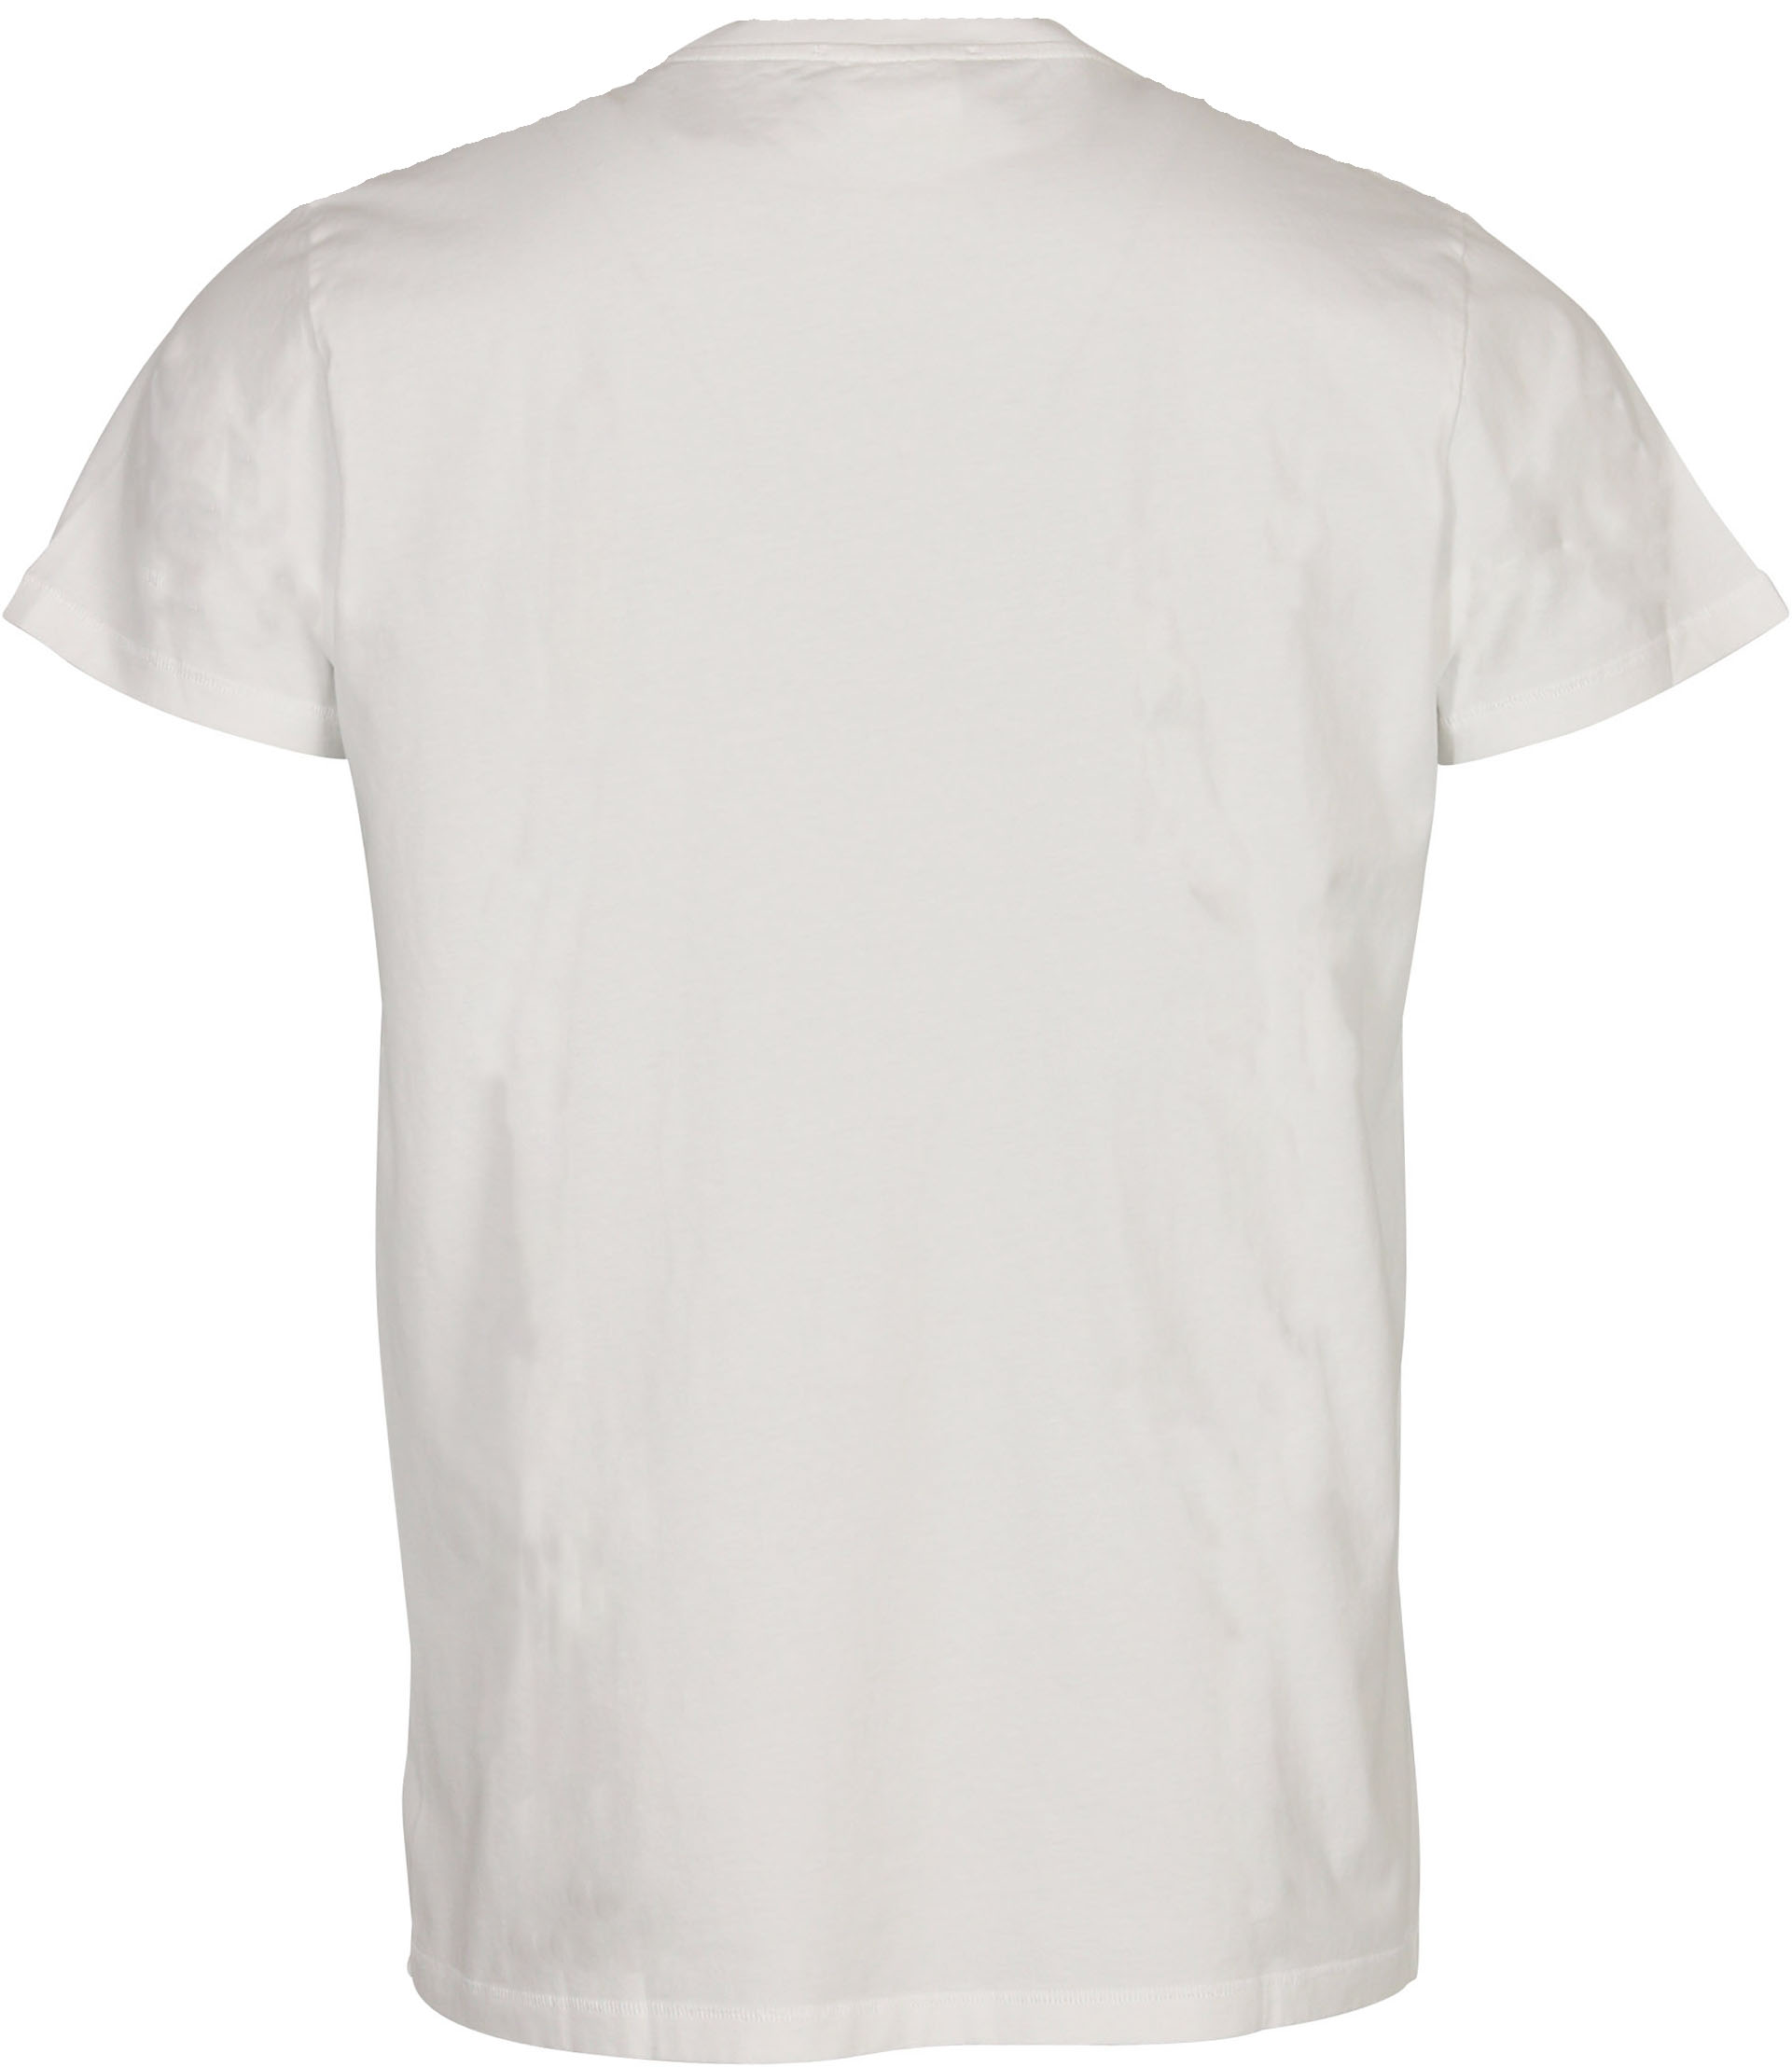 Helmut Lang T-Shirt White Printed XXL